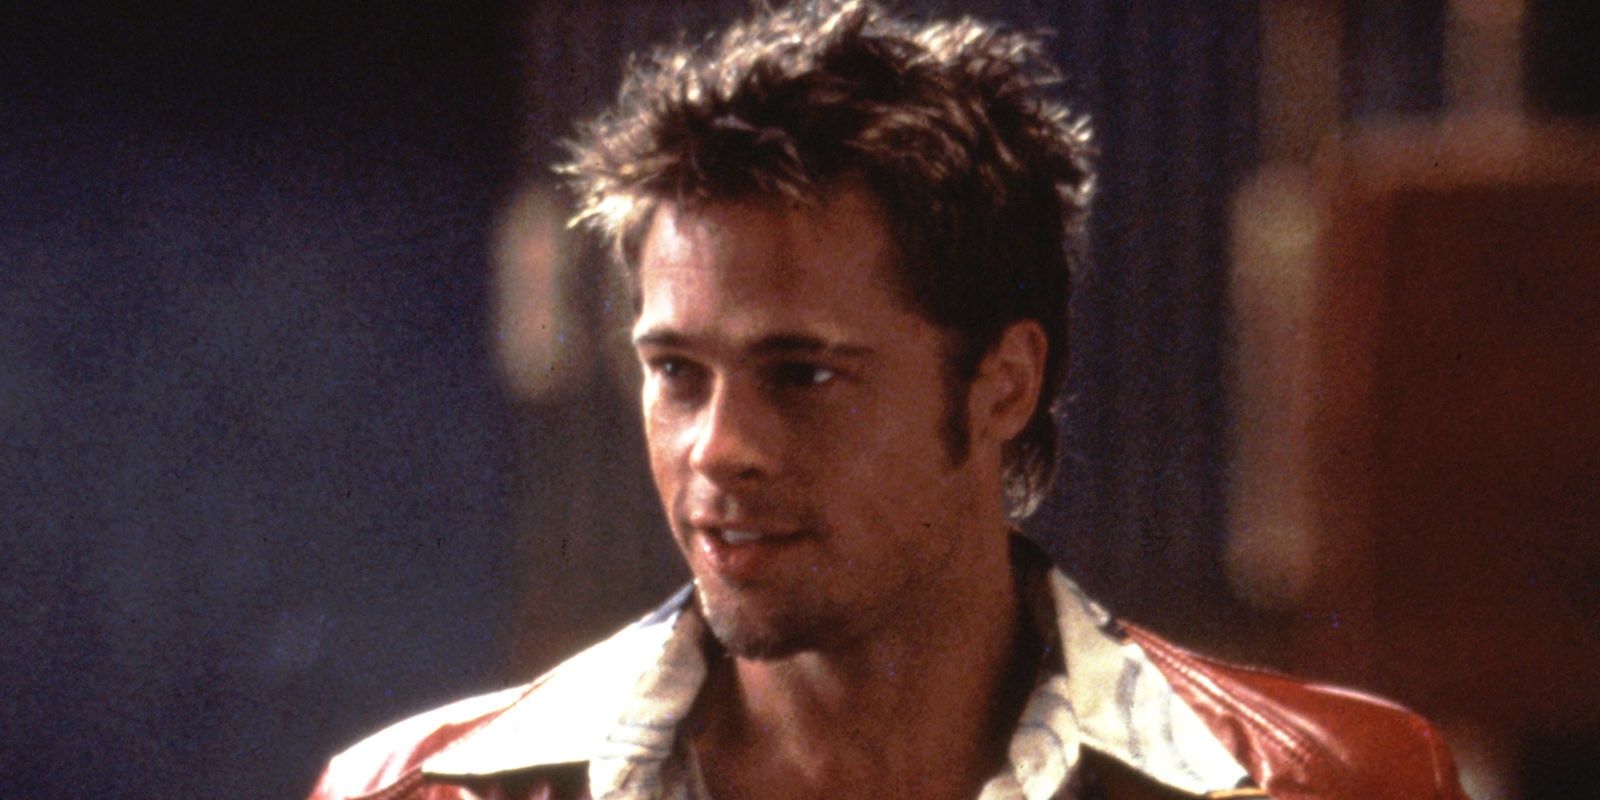 A headshot of Brad Pitt as Tyler Durden in a red suit. 